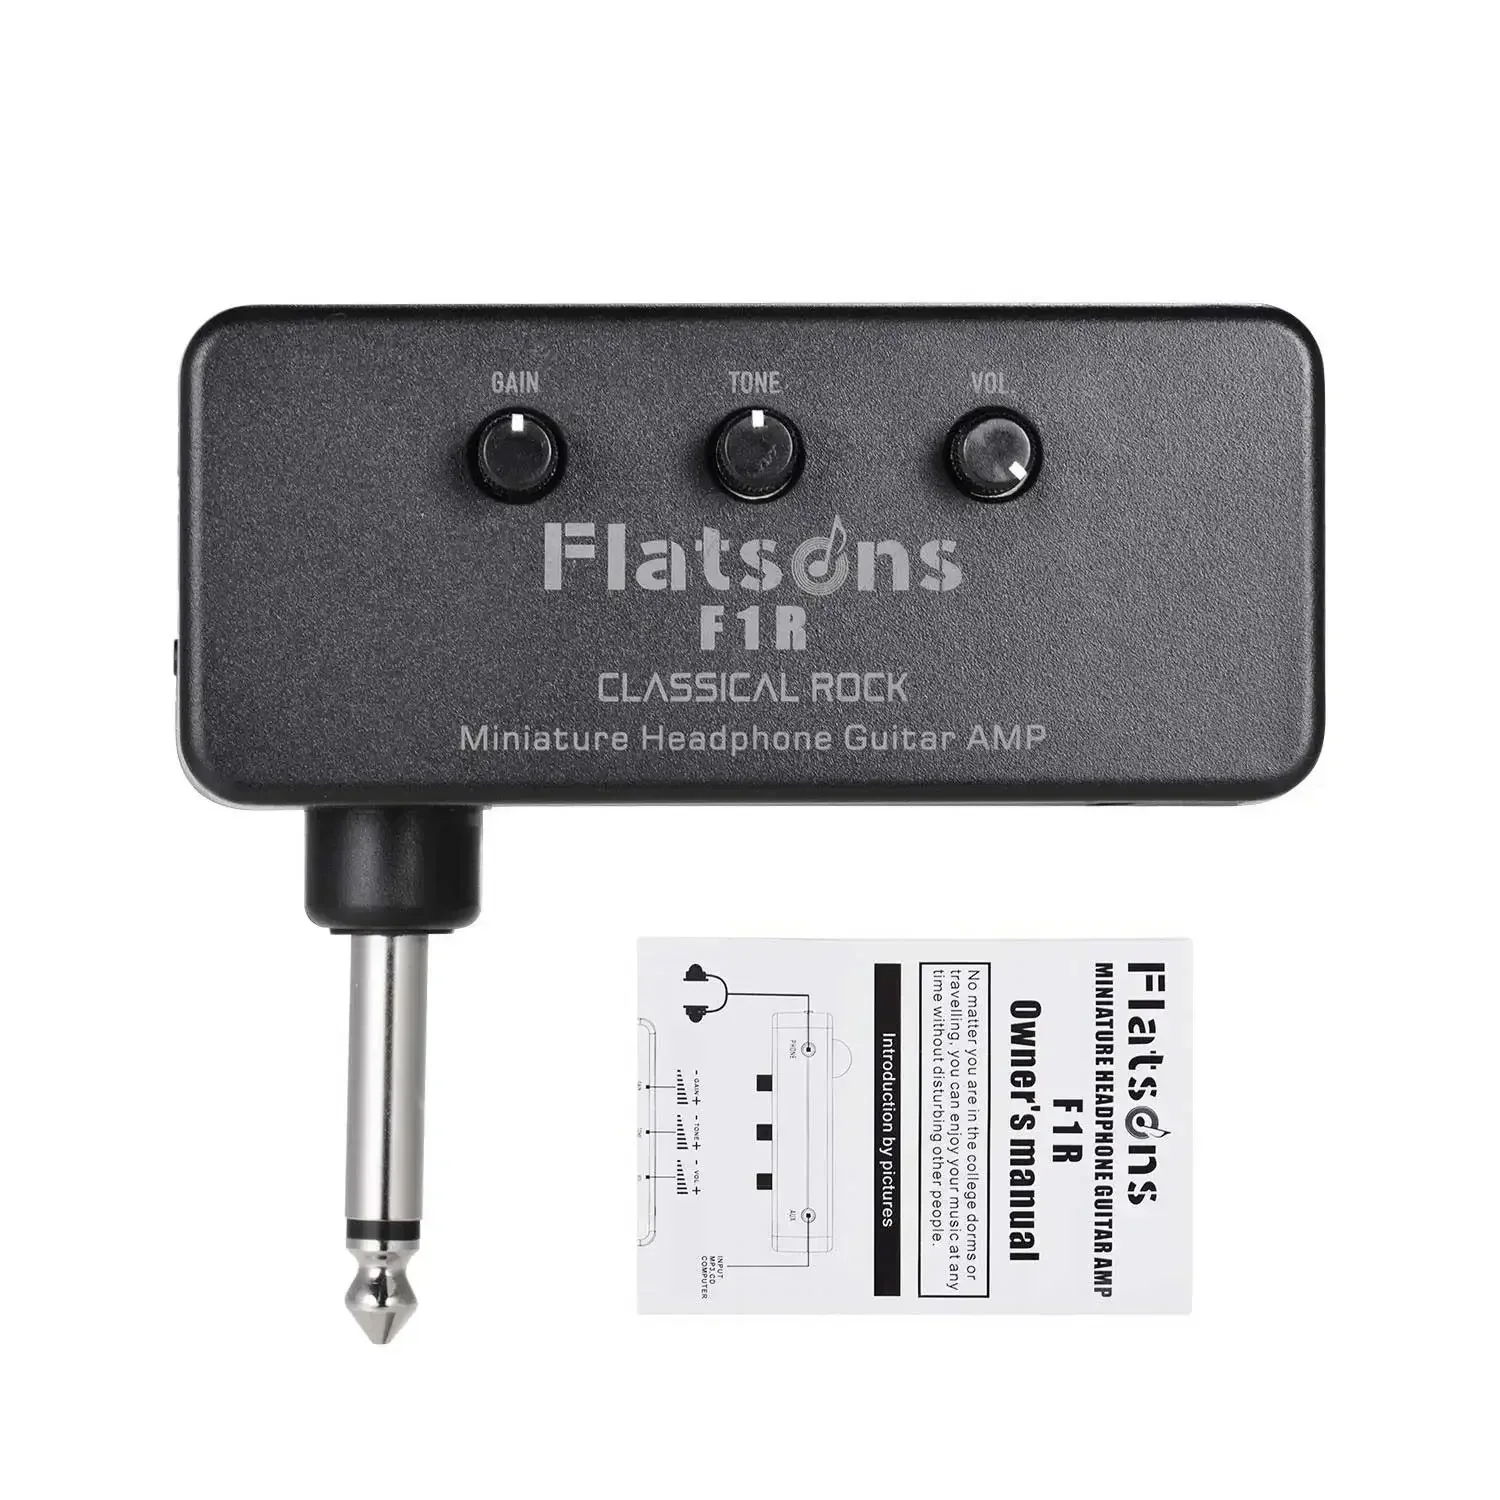 

Flatsons F1R Mini Headphone Guitar Bass Amplifier Guitar Accessories Headphone Amp with 3.5mm Headphone Jack AUX Input Plug